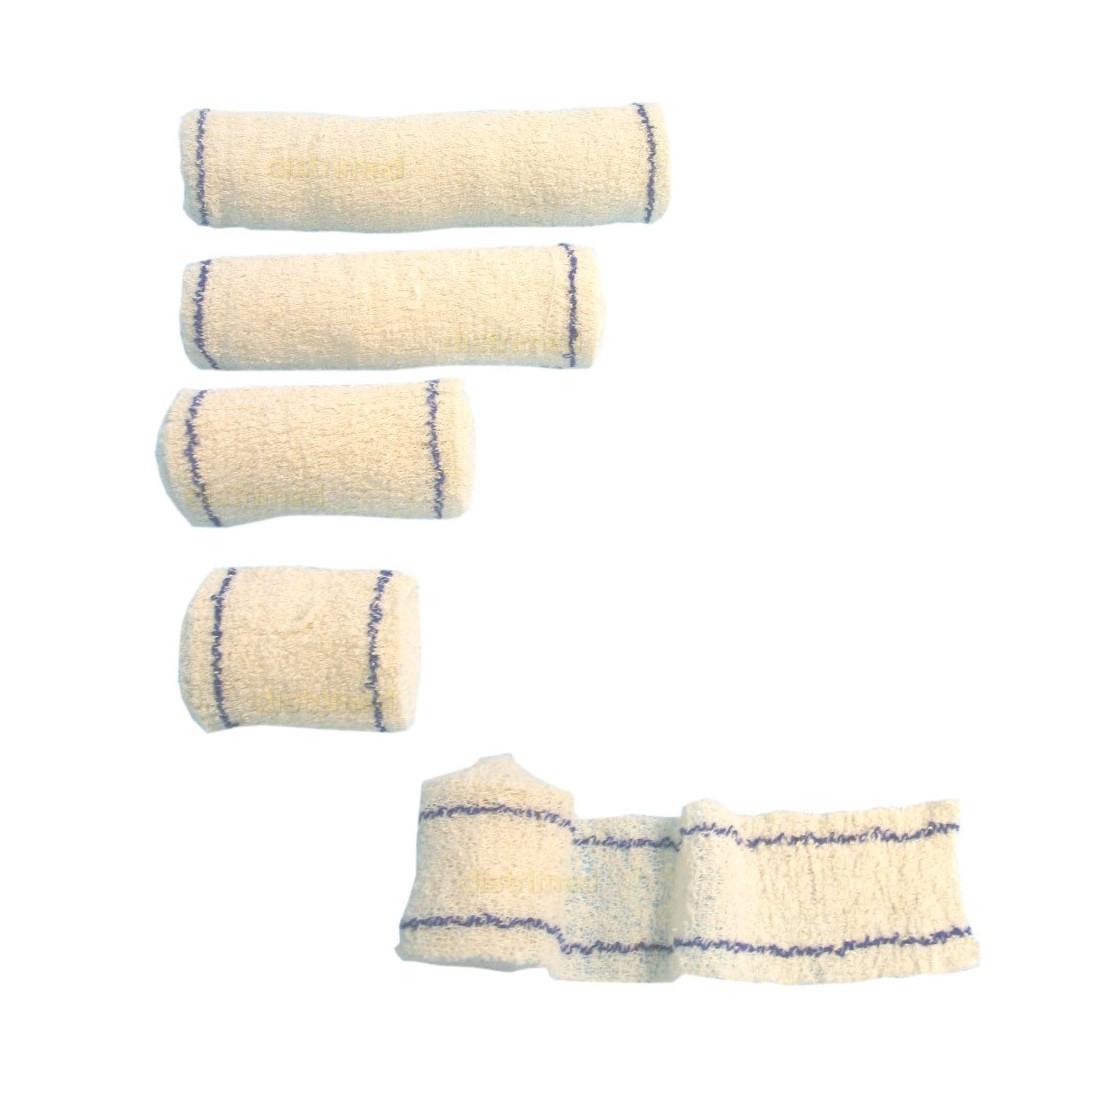 Bandage : bande strapping, velpeau/crêpe, extensible, pour vos